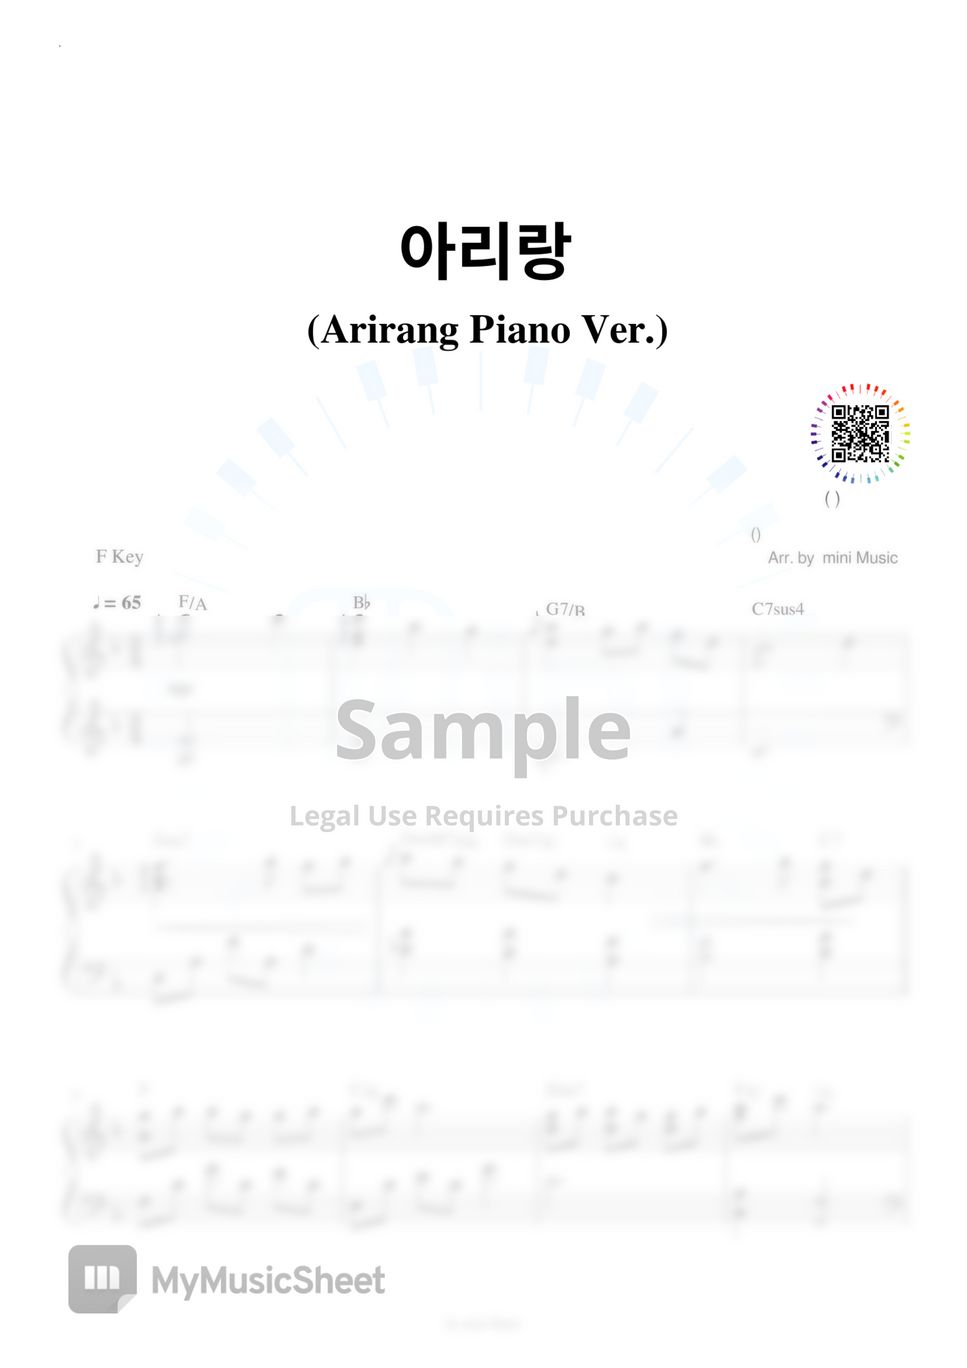 Korea Traditional Music - 아리랑 (Arirang) (Piano Ver.) by mini Music